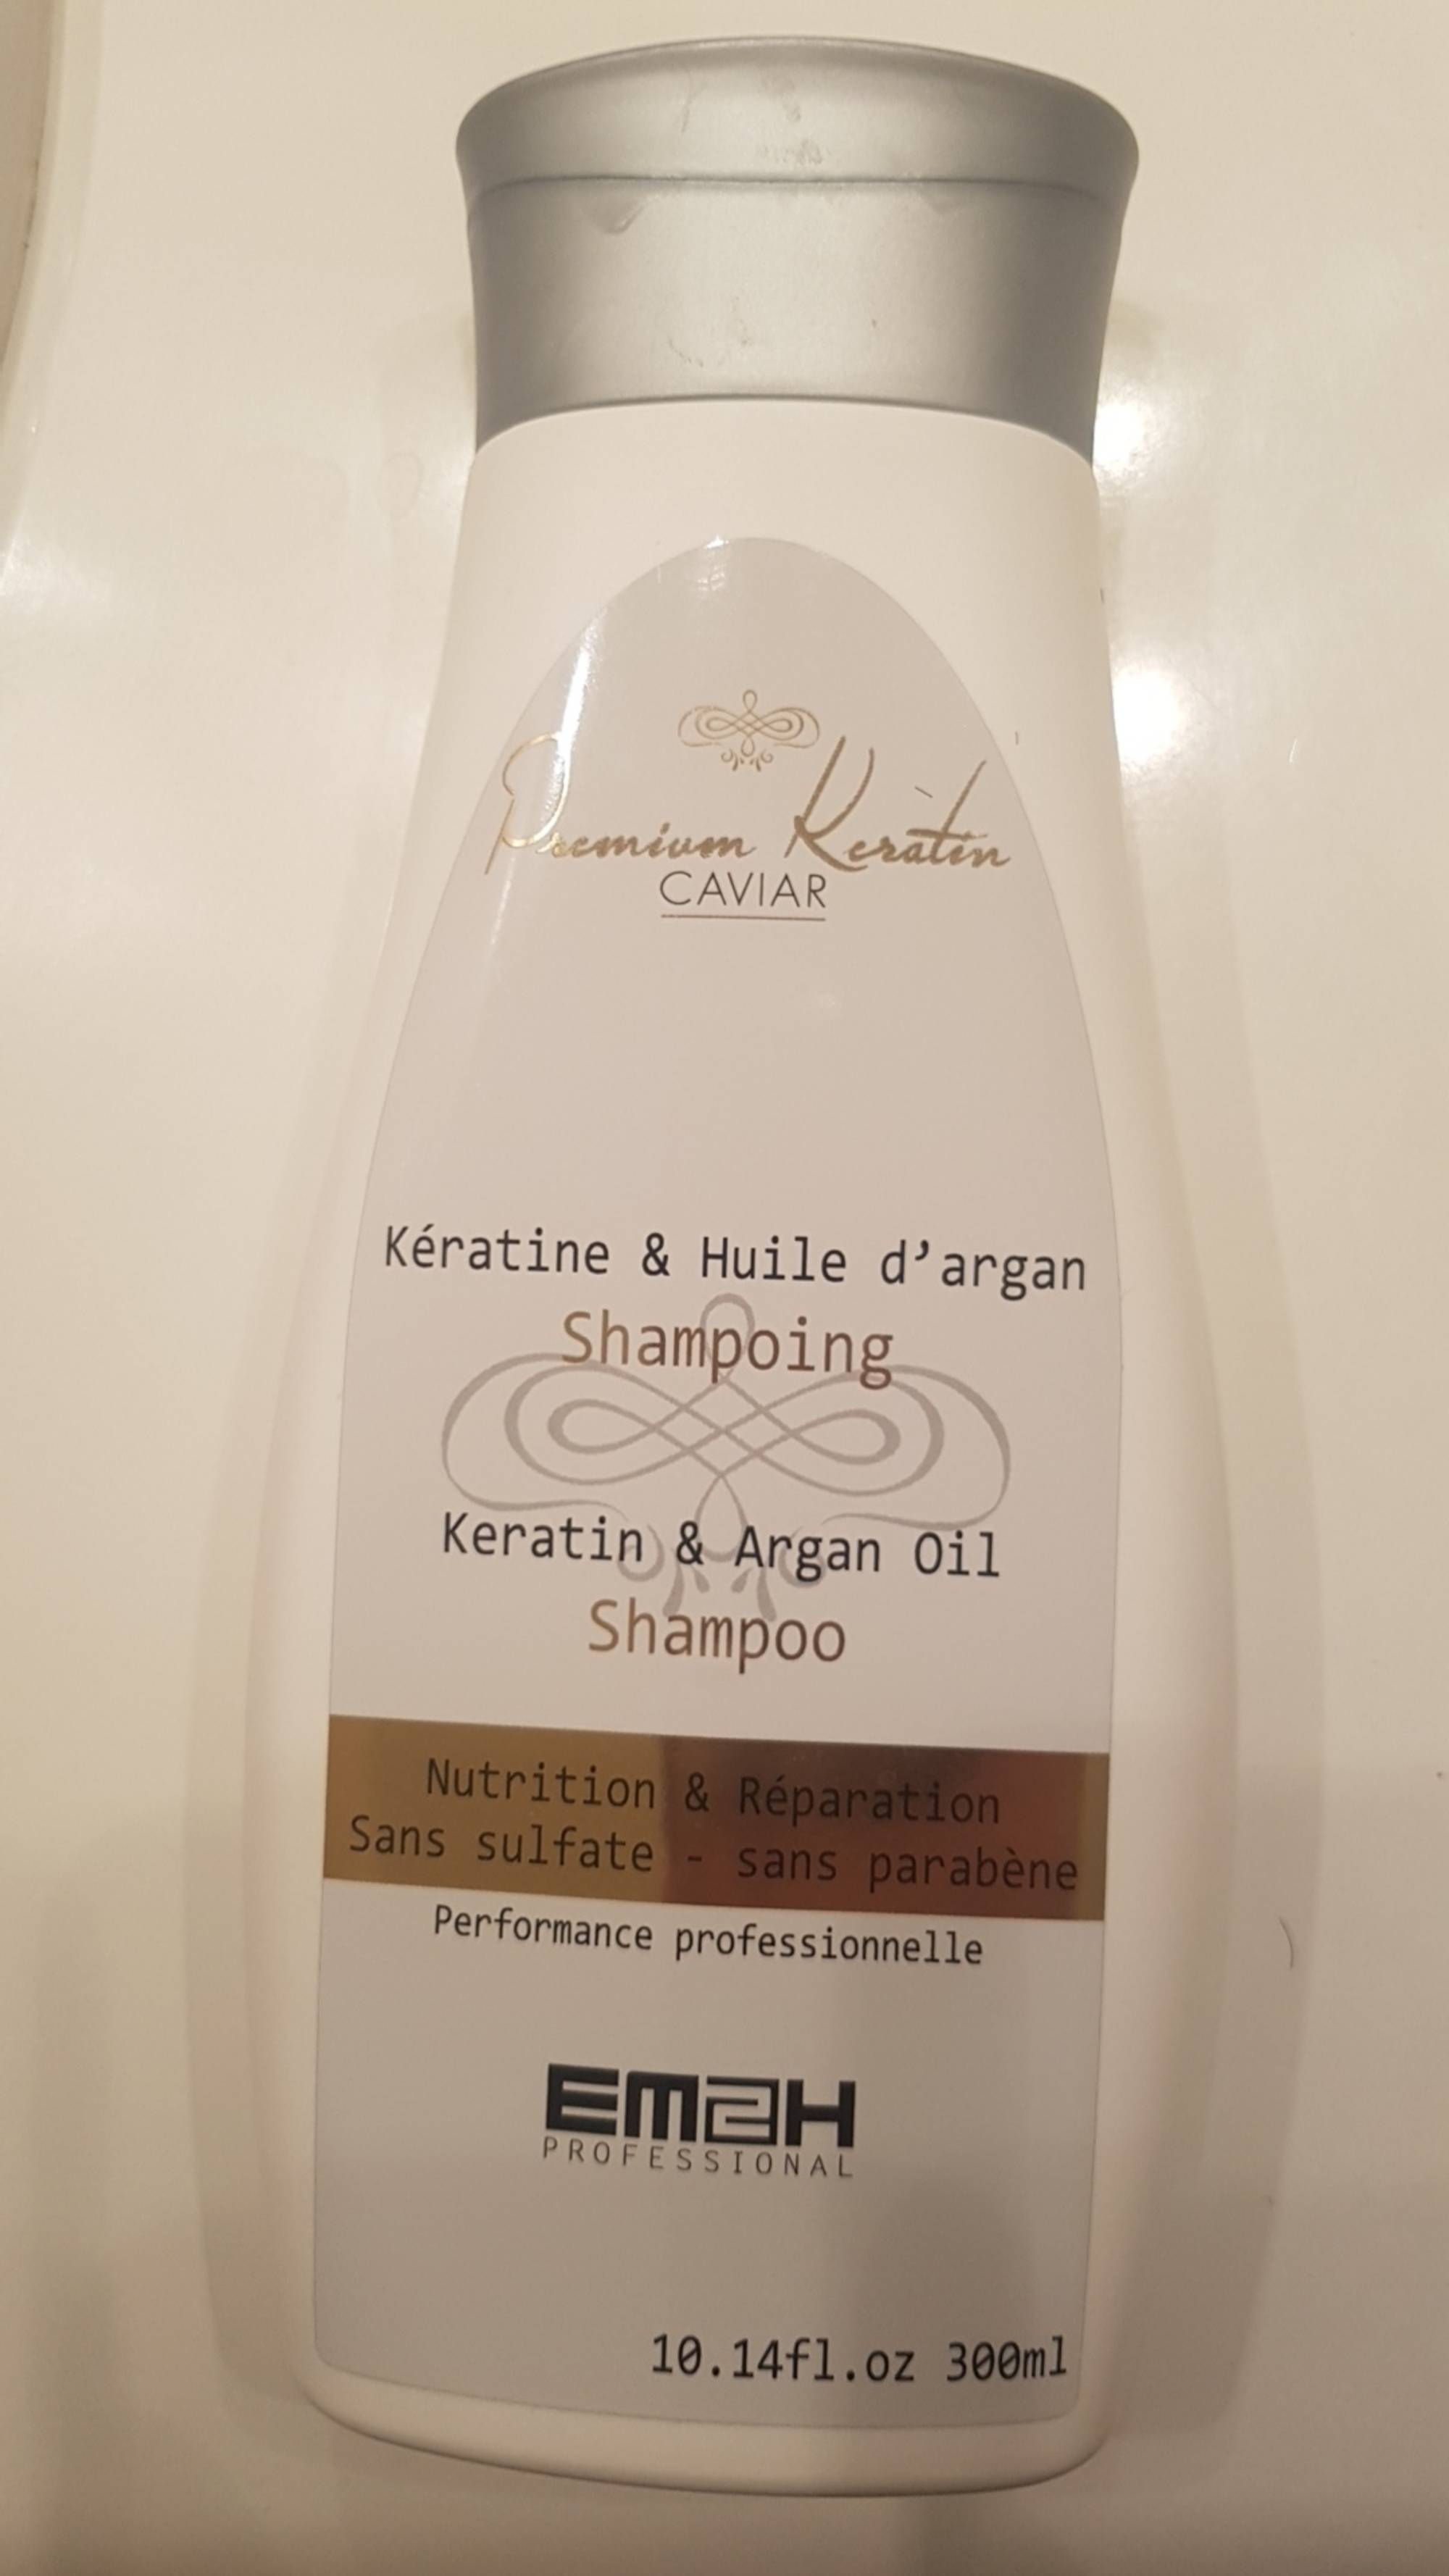 EM2H PROFESSIONAL - Shampooing keratin & huile d'argan